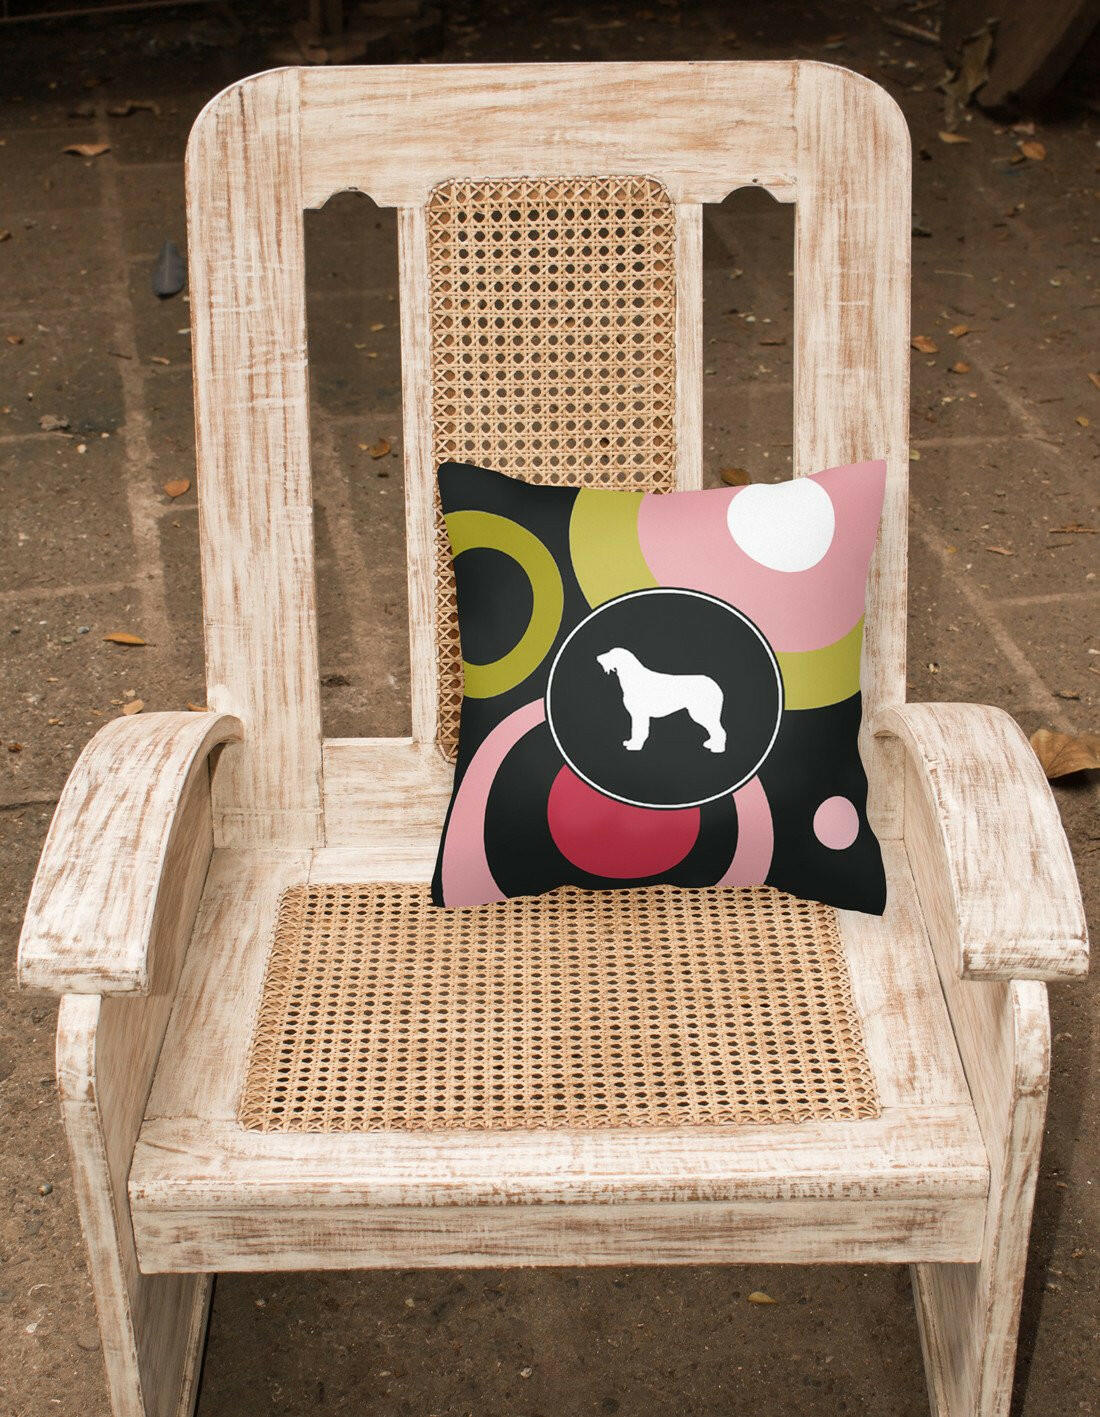 Irish Wolfhound Decorative   Canvas Fabric Pillow by Caroline's Treasures